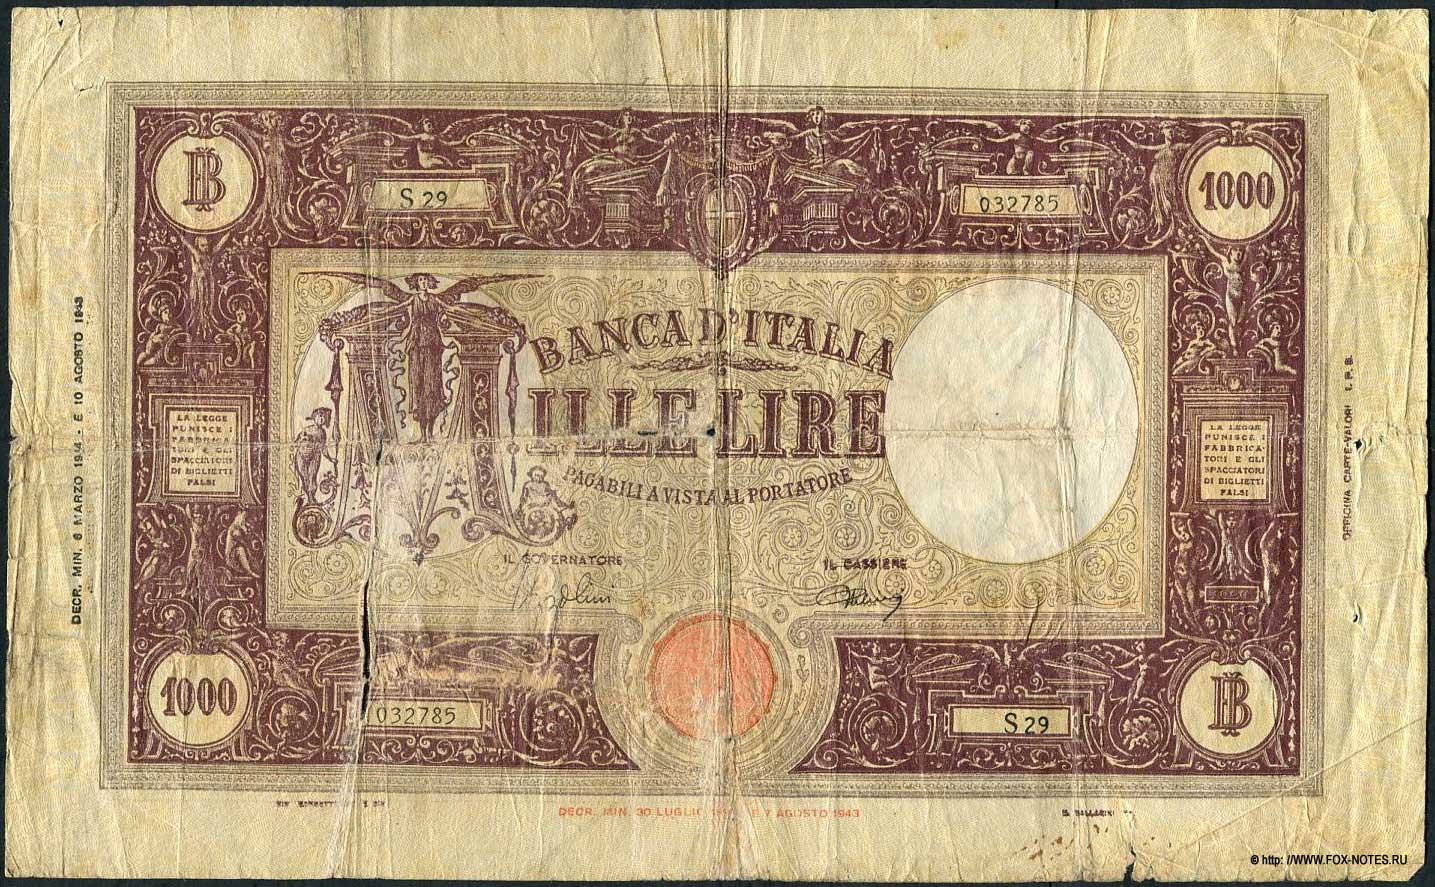   Banca d'Italia 1000  1944  Azzolini Urbini